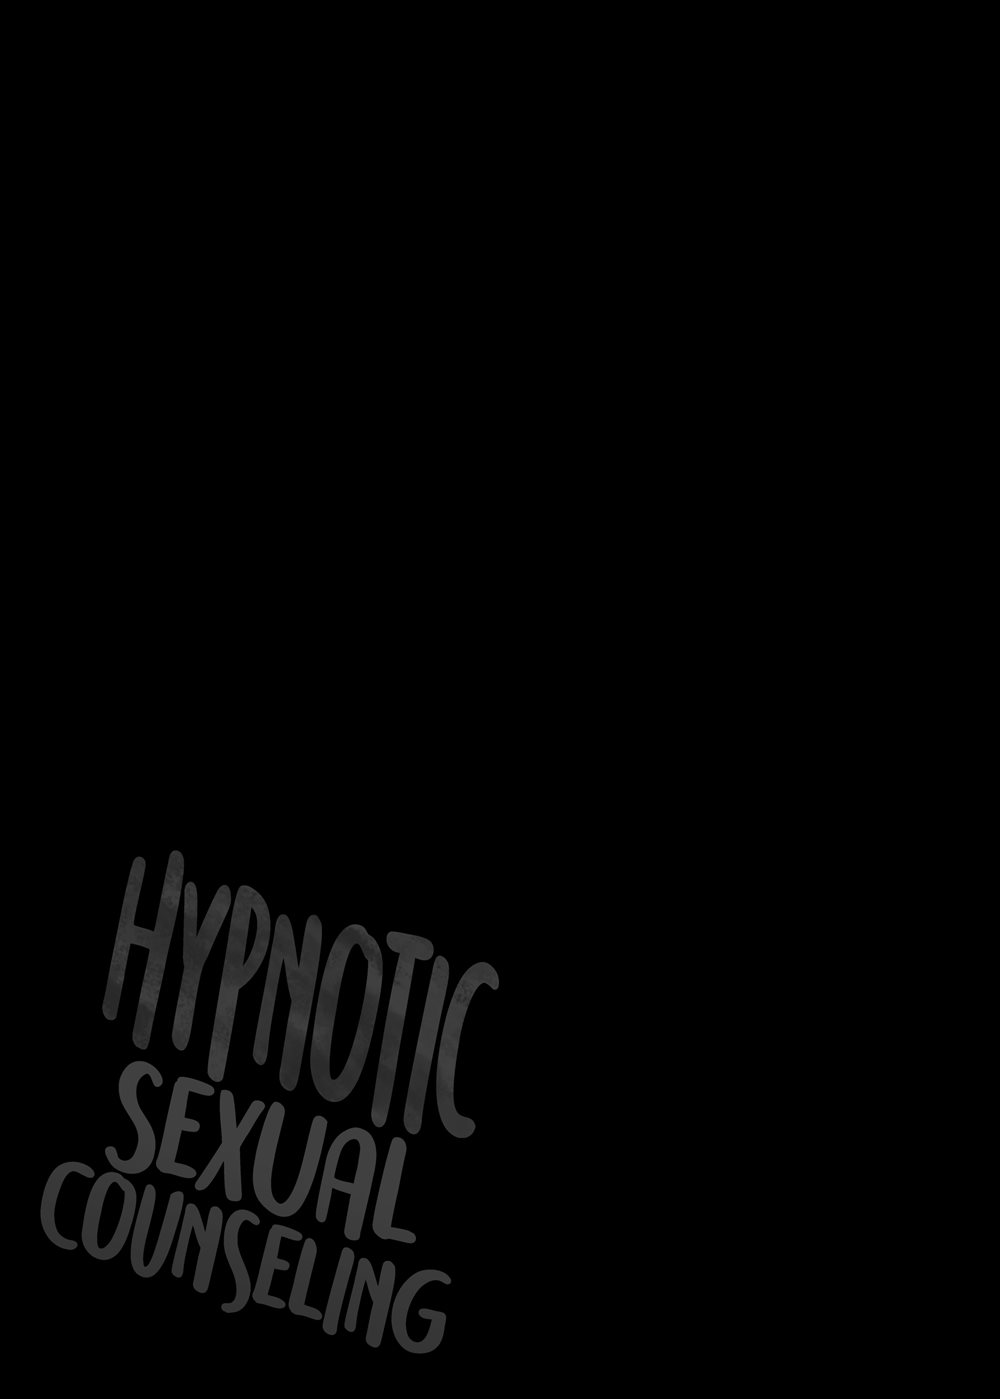 Hypnosis Sex Guidance!